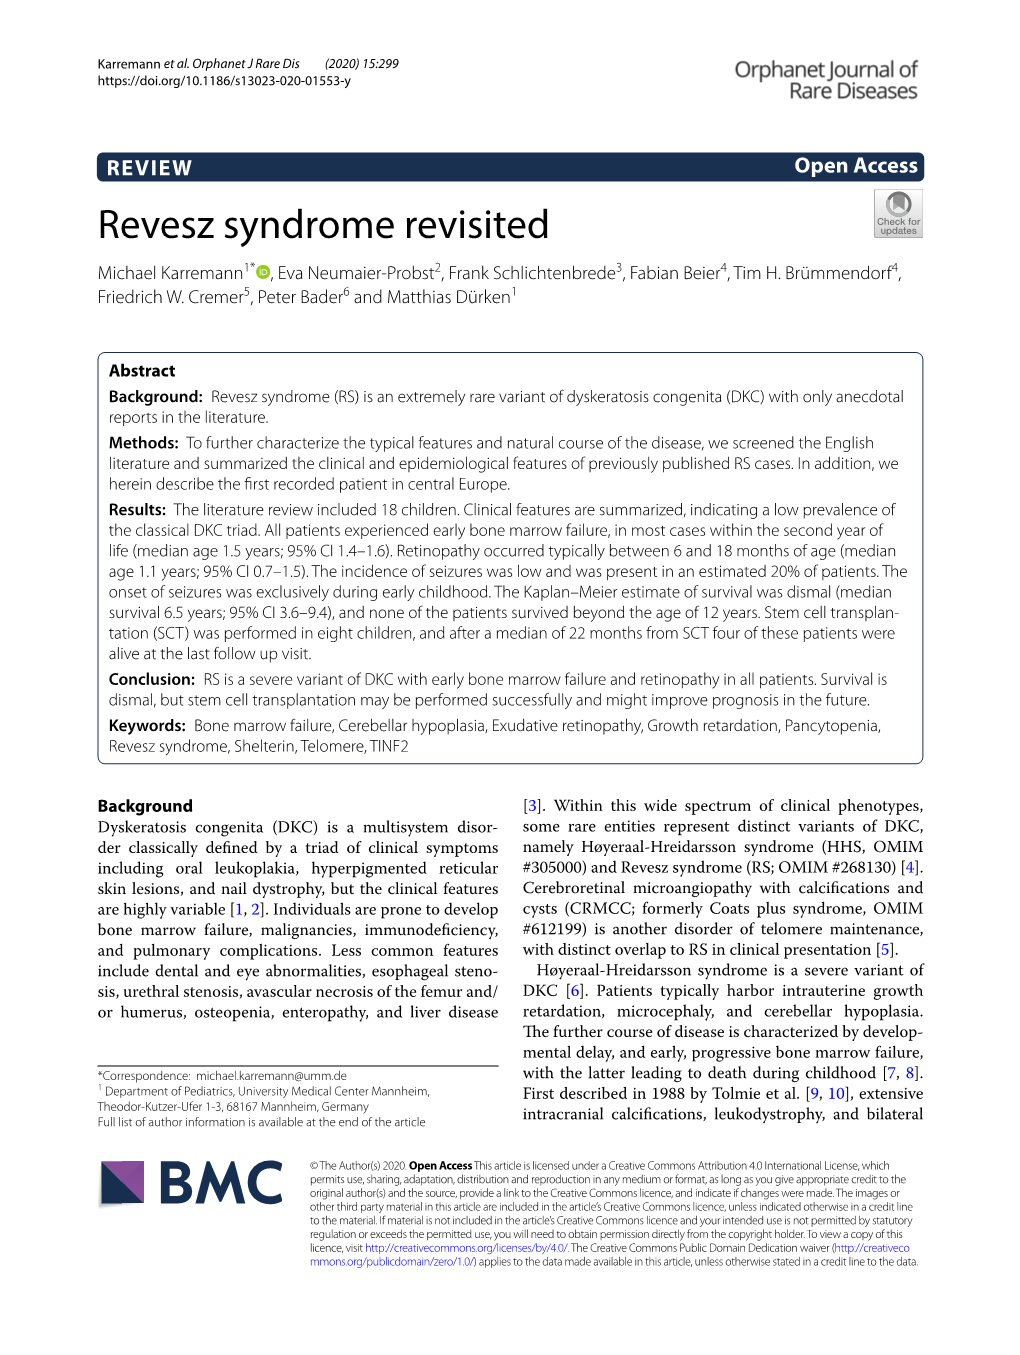 Revesz Syndrome Revisited Michael Karremann1* , Eva Neumaier‑Probst2, Frank Schlichtenbrede3, Fabian Beier4, Tim H